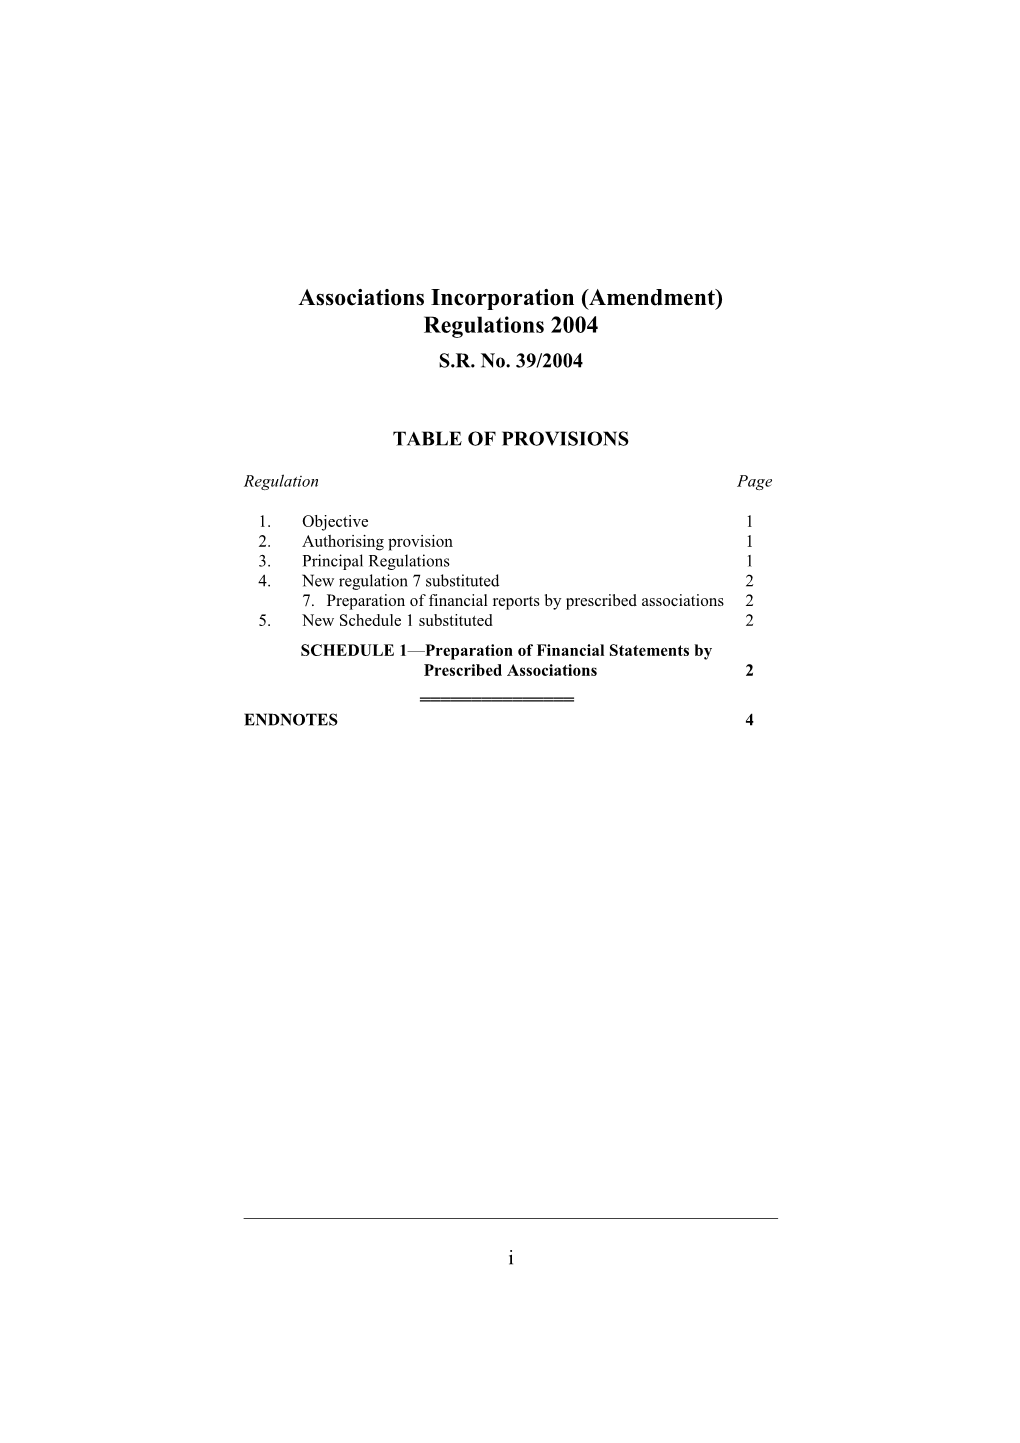 Associations Incorporation (Amendment) Regulations 2004